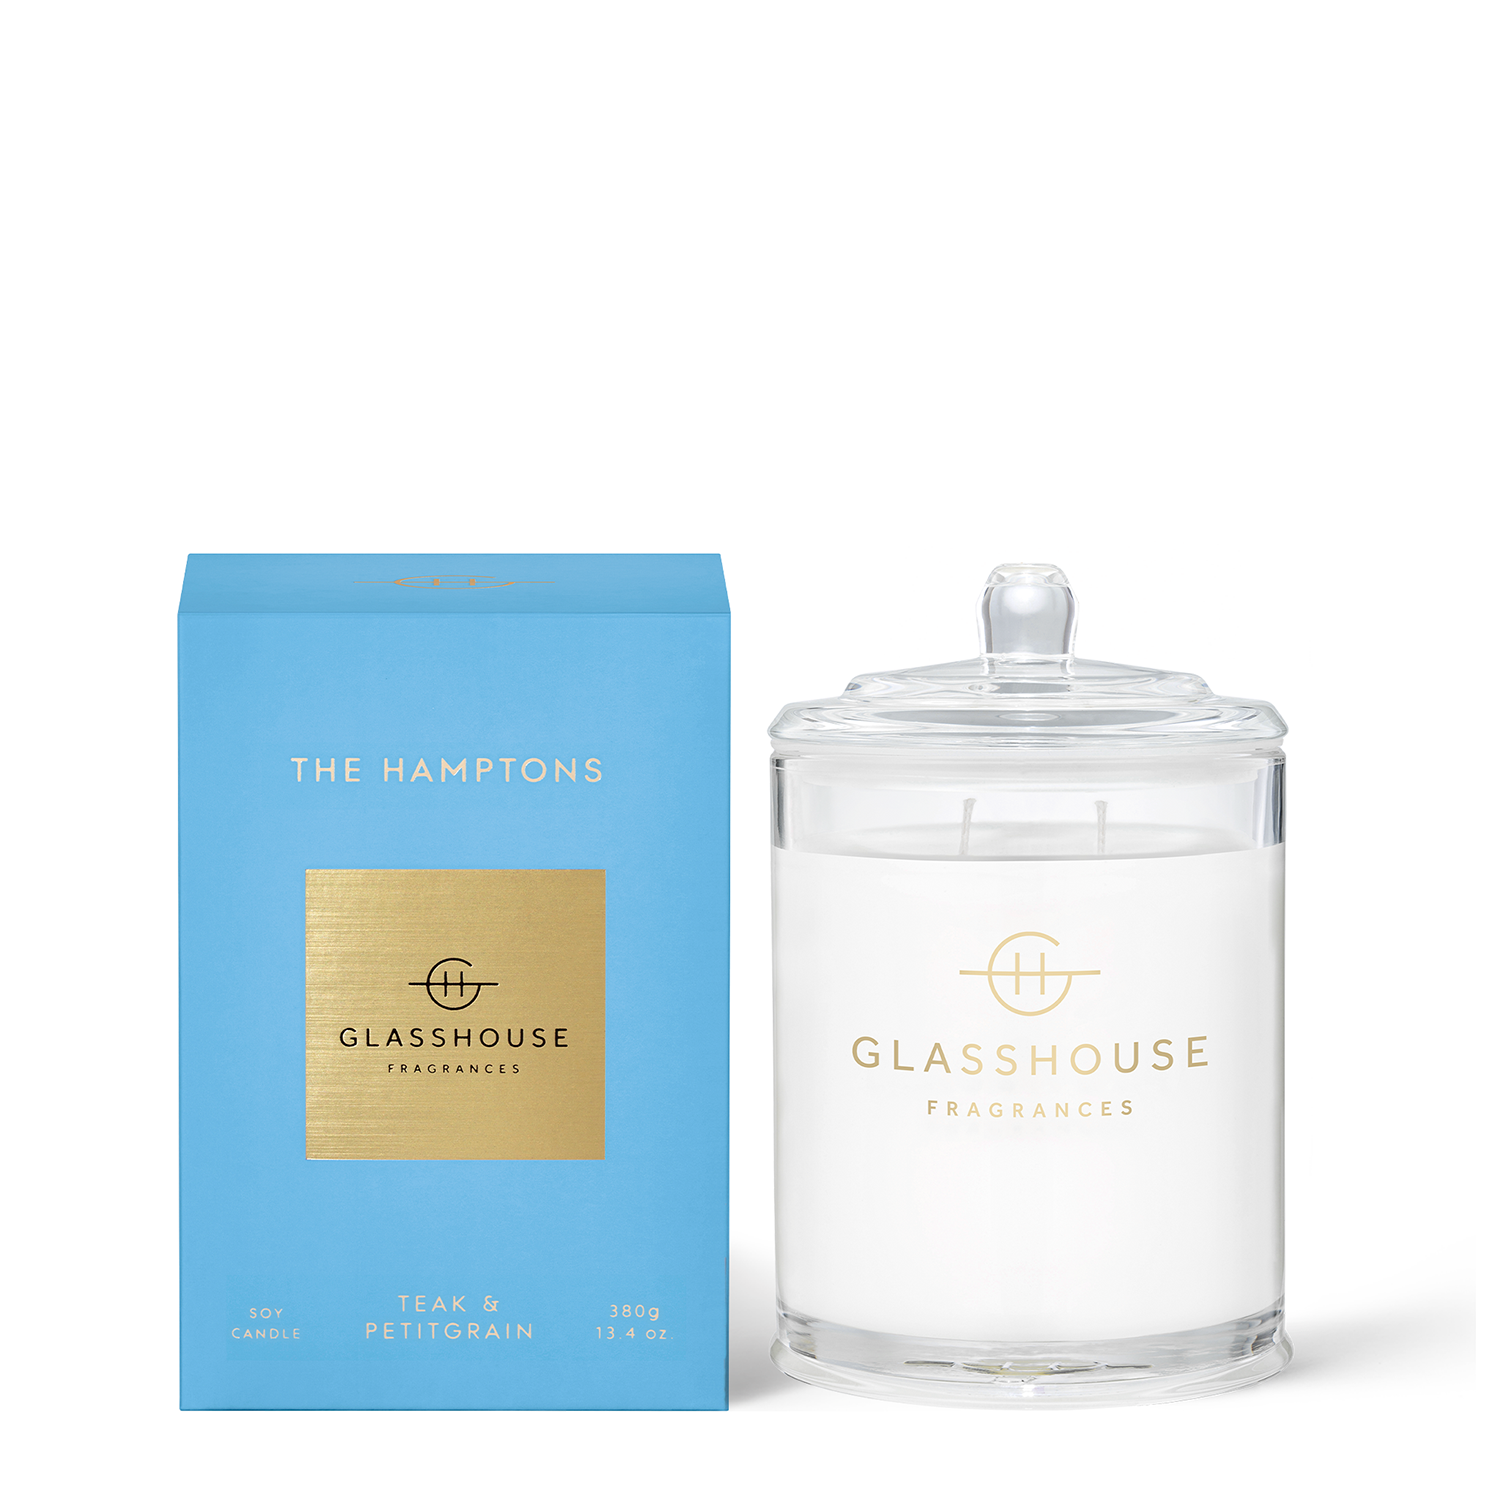 Glasshouse Fragrances - The Hamptons Candle / 13 oz